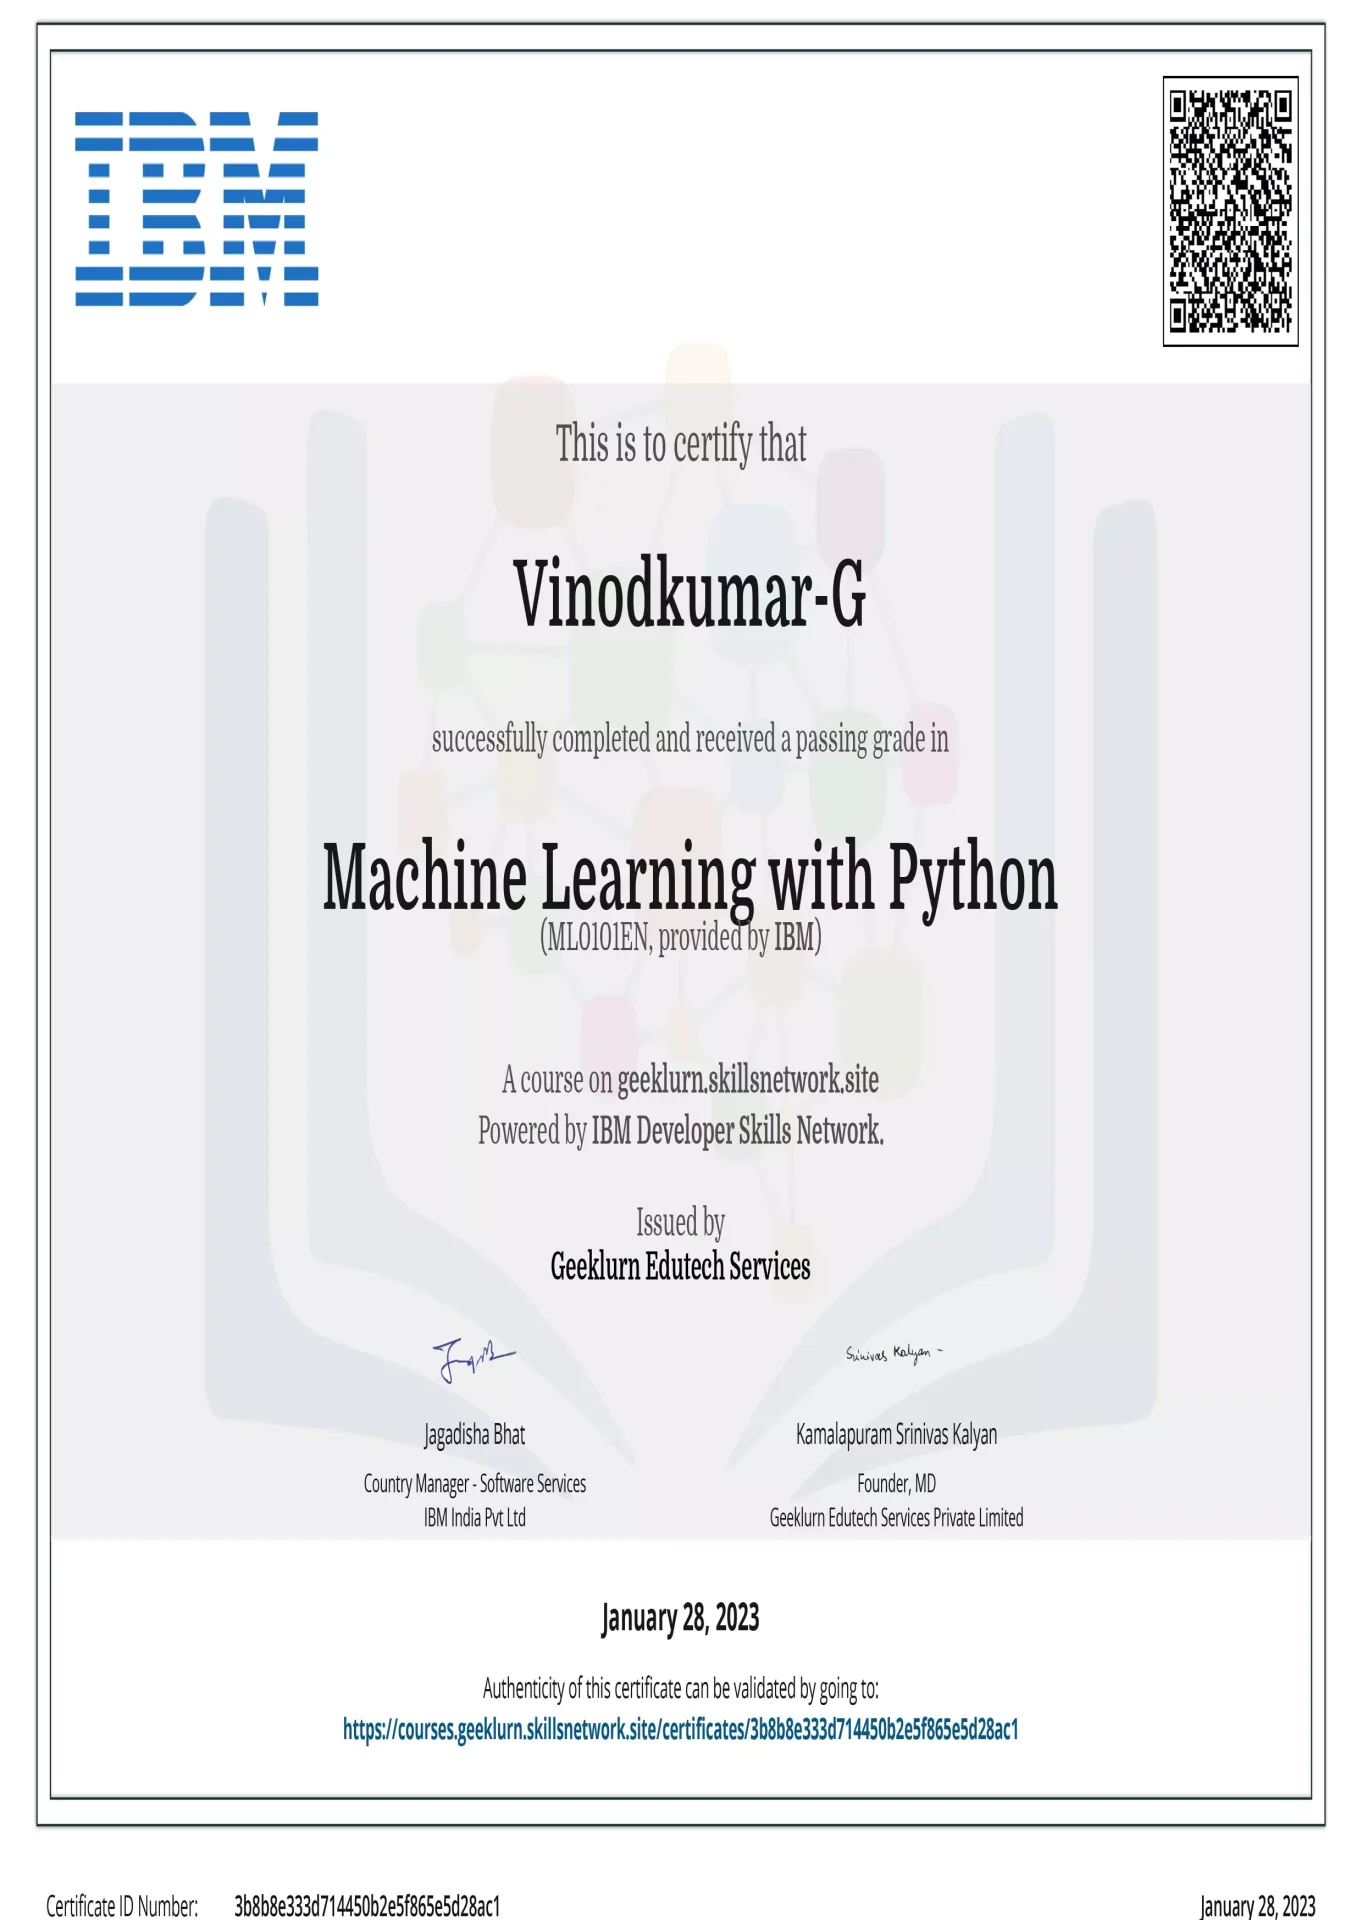 ibm-ml0101en-certificate-geeklurn-edutech-services-machine-learning-with-python